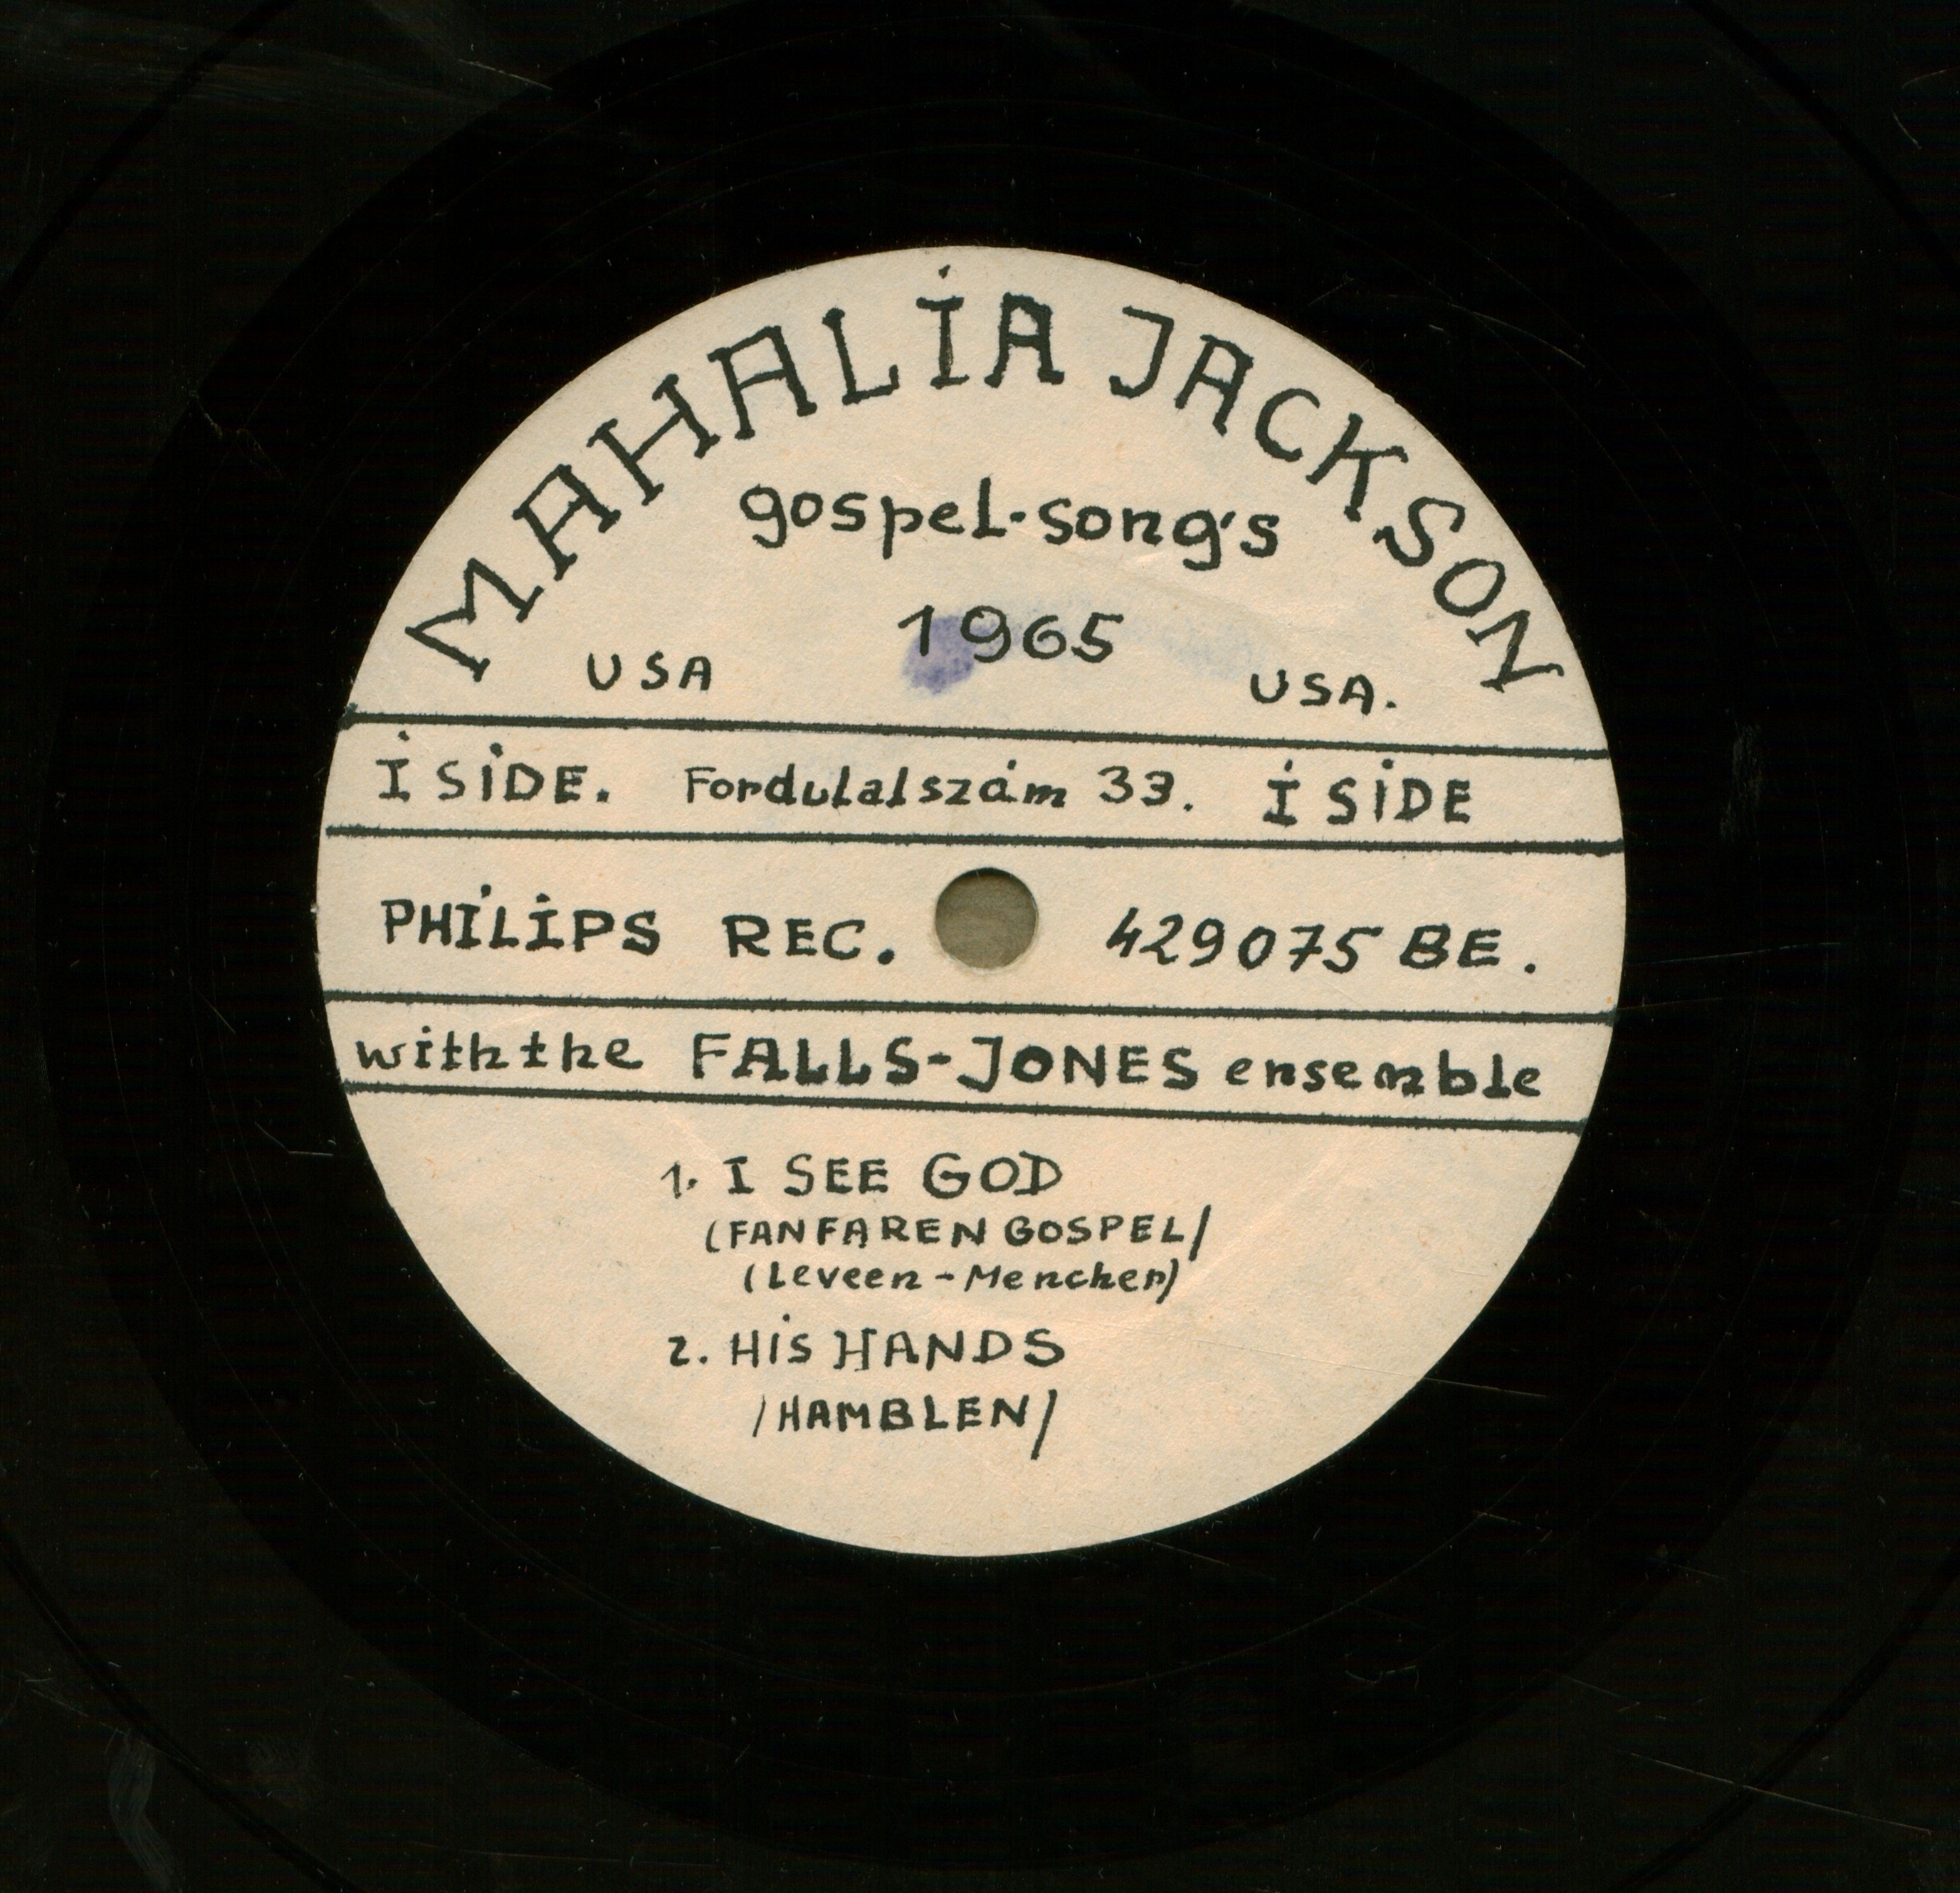 Mahalia Jackson Gospel song's ![songs] with the Falls-Jones ensemble